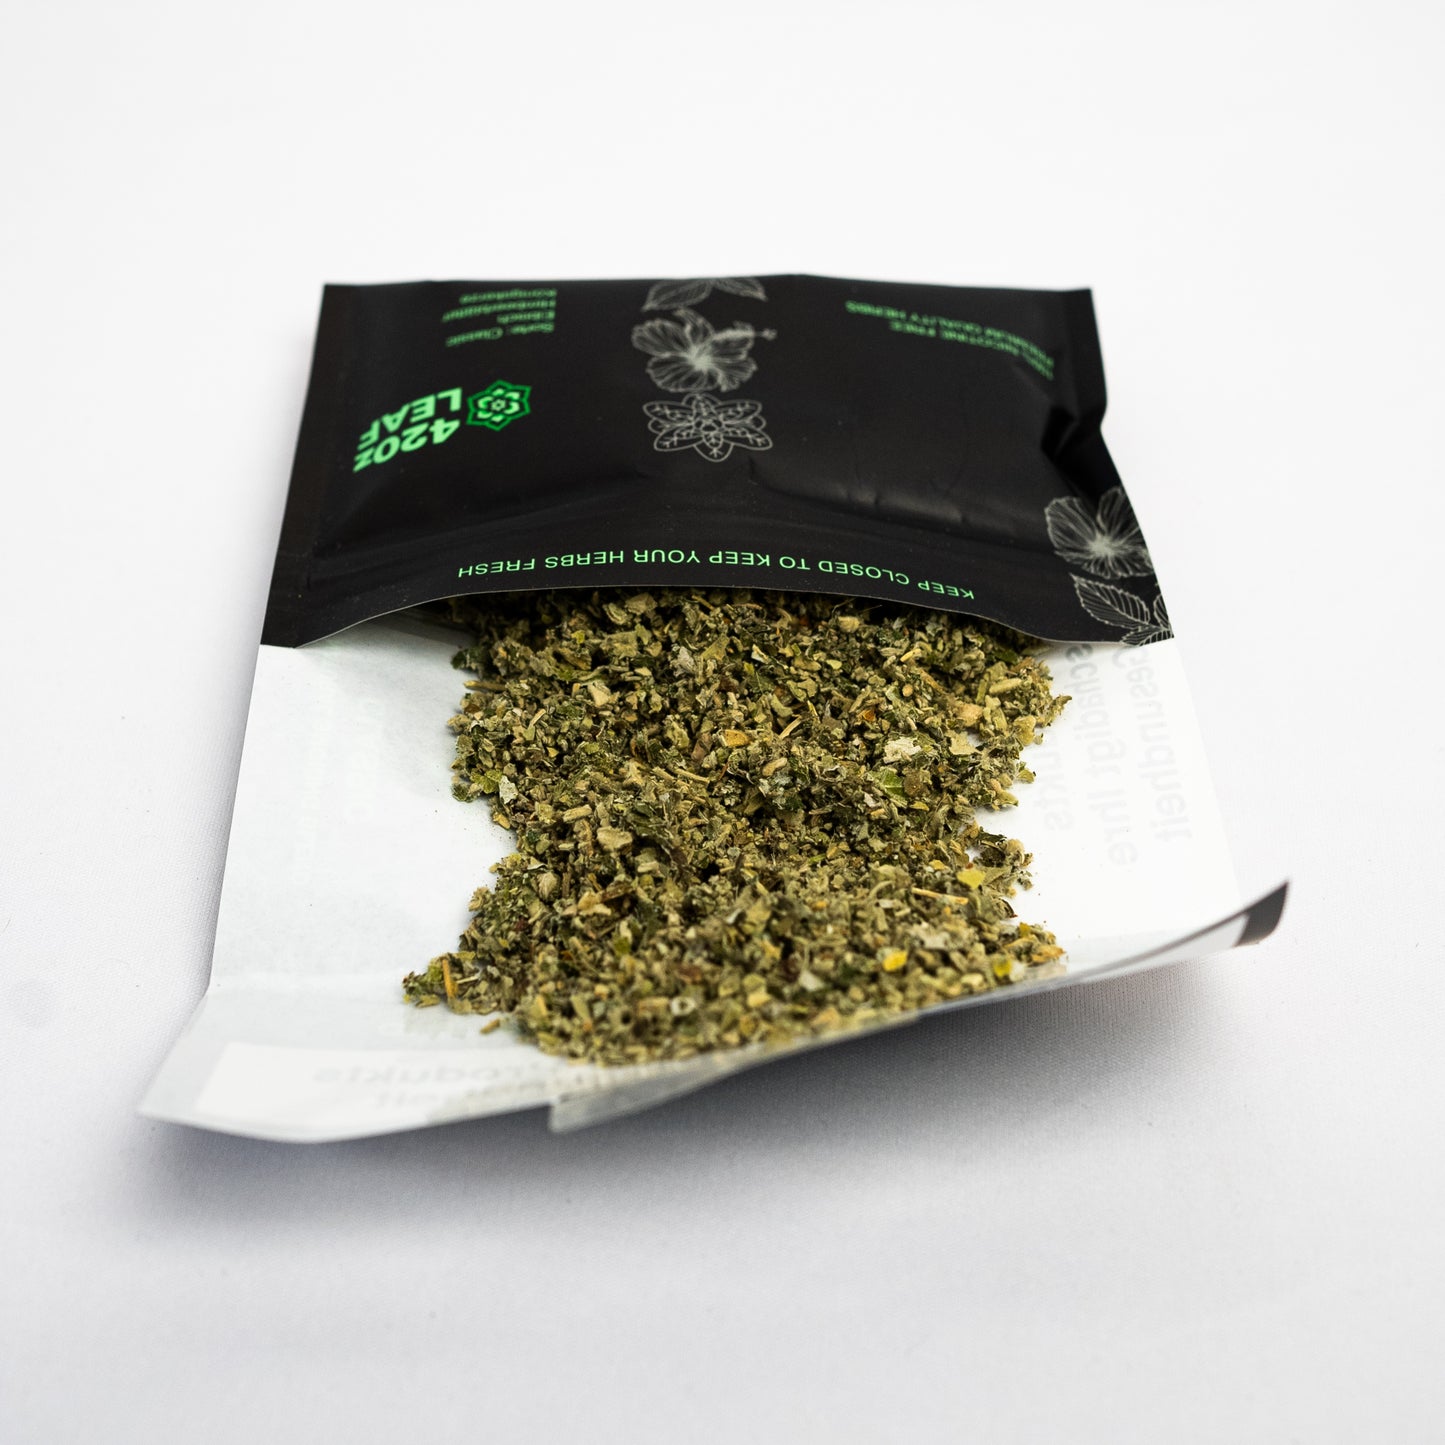 420z Leaf Classic 20 g – Kräutermischung nikotinfreier Tabakersatz